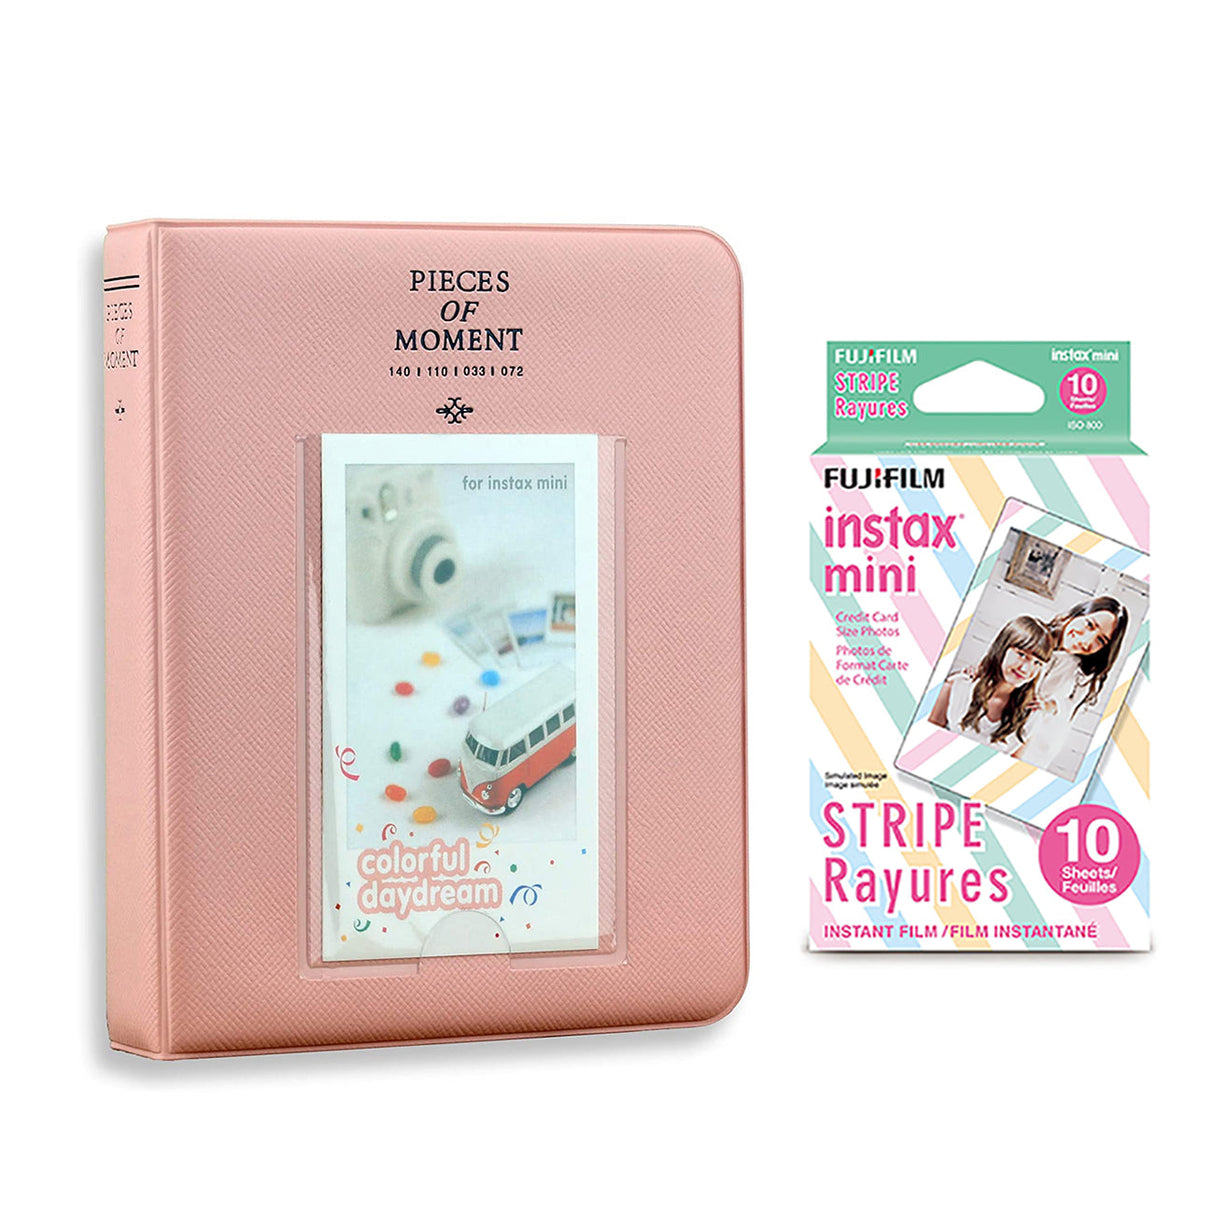 Fujifilm Instax Mini 10X1 stripe Instant Film with Instax Time Photo Album 64 Sheets Blush pink